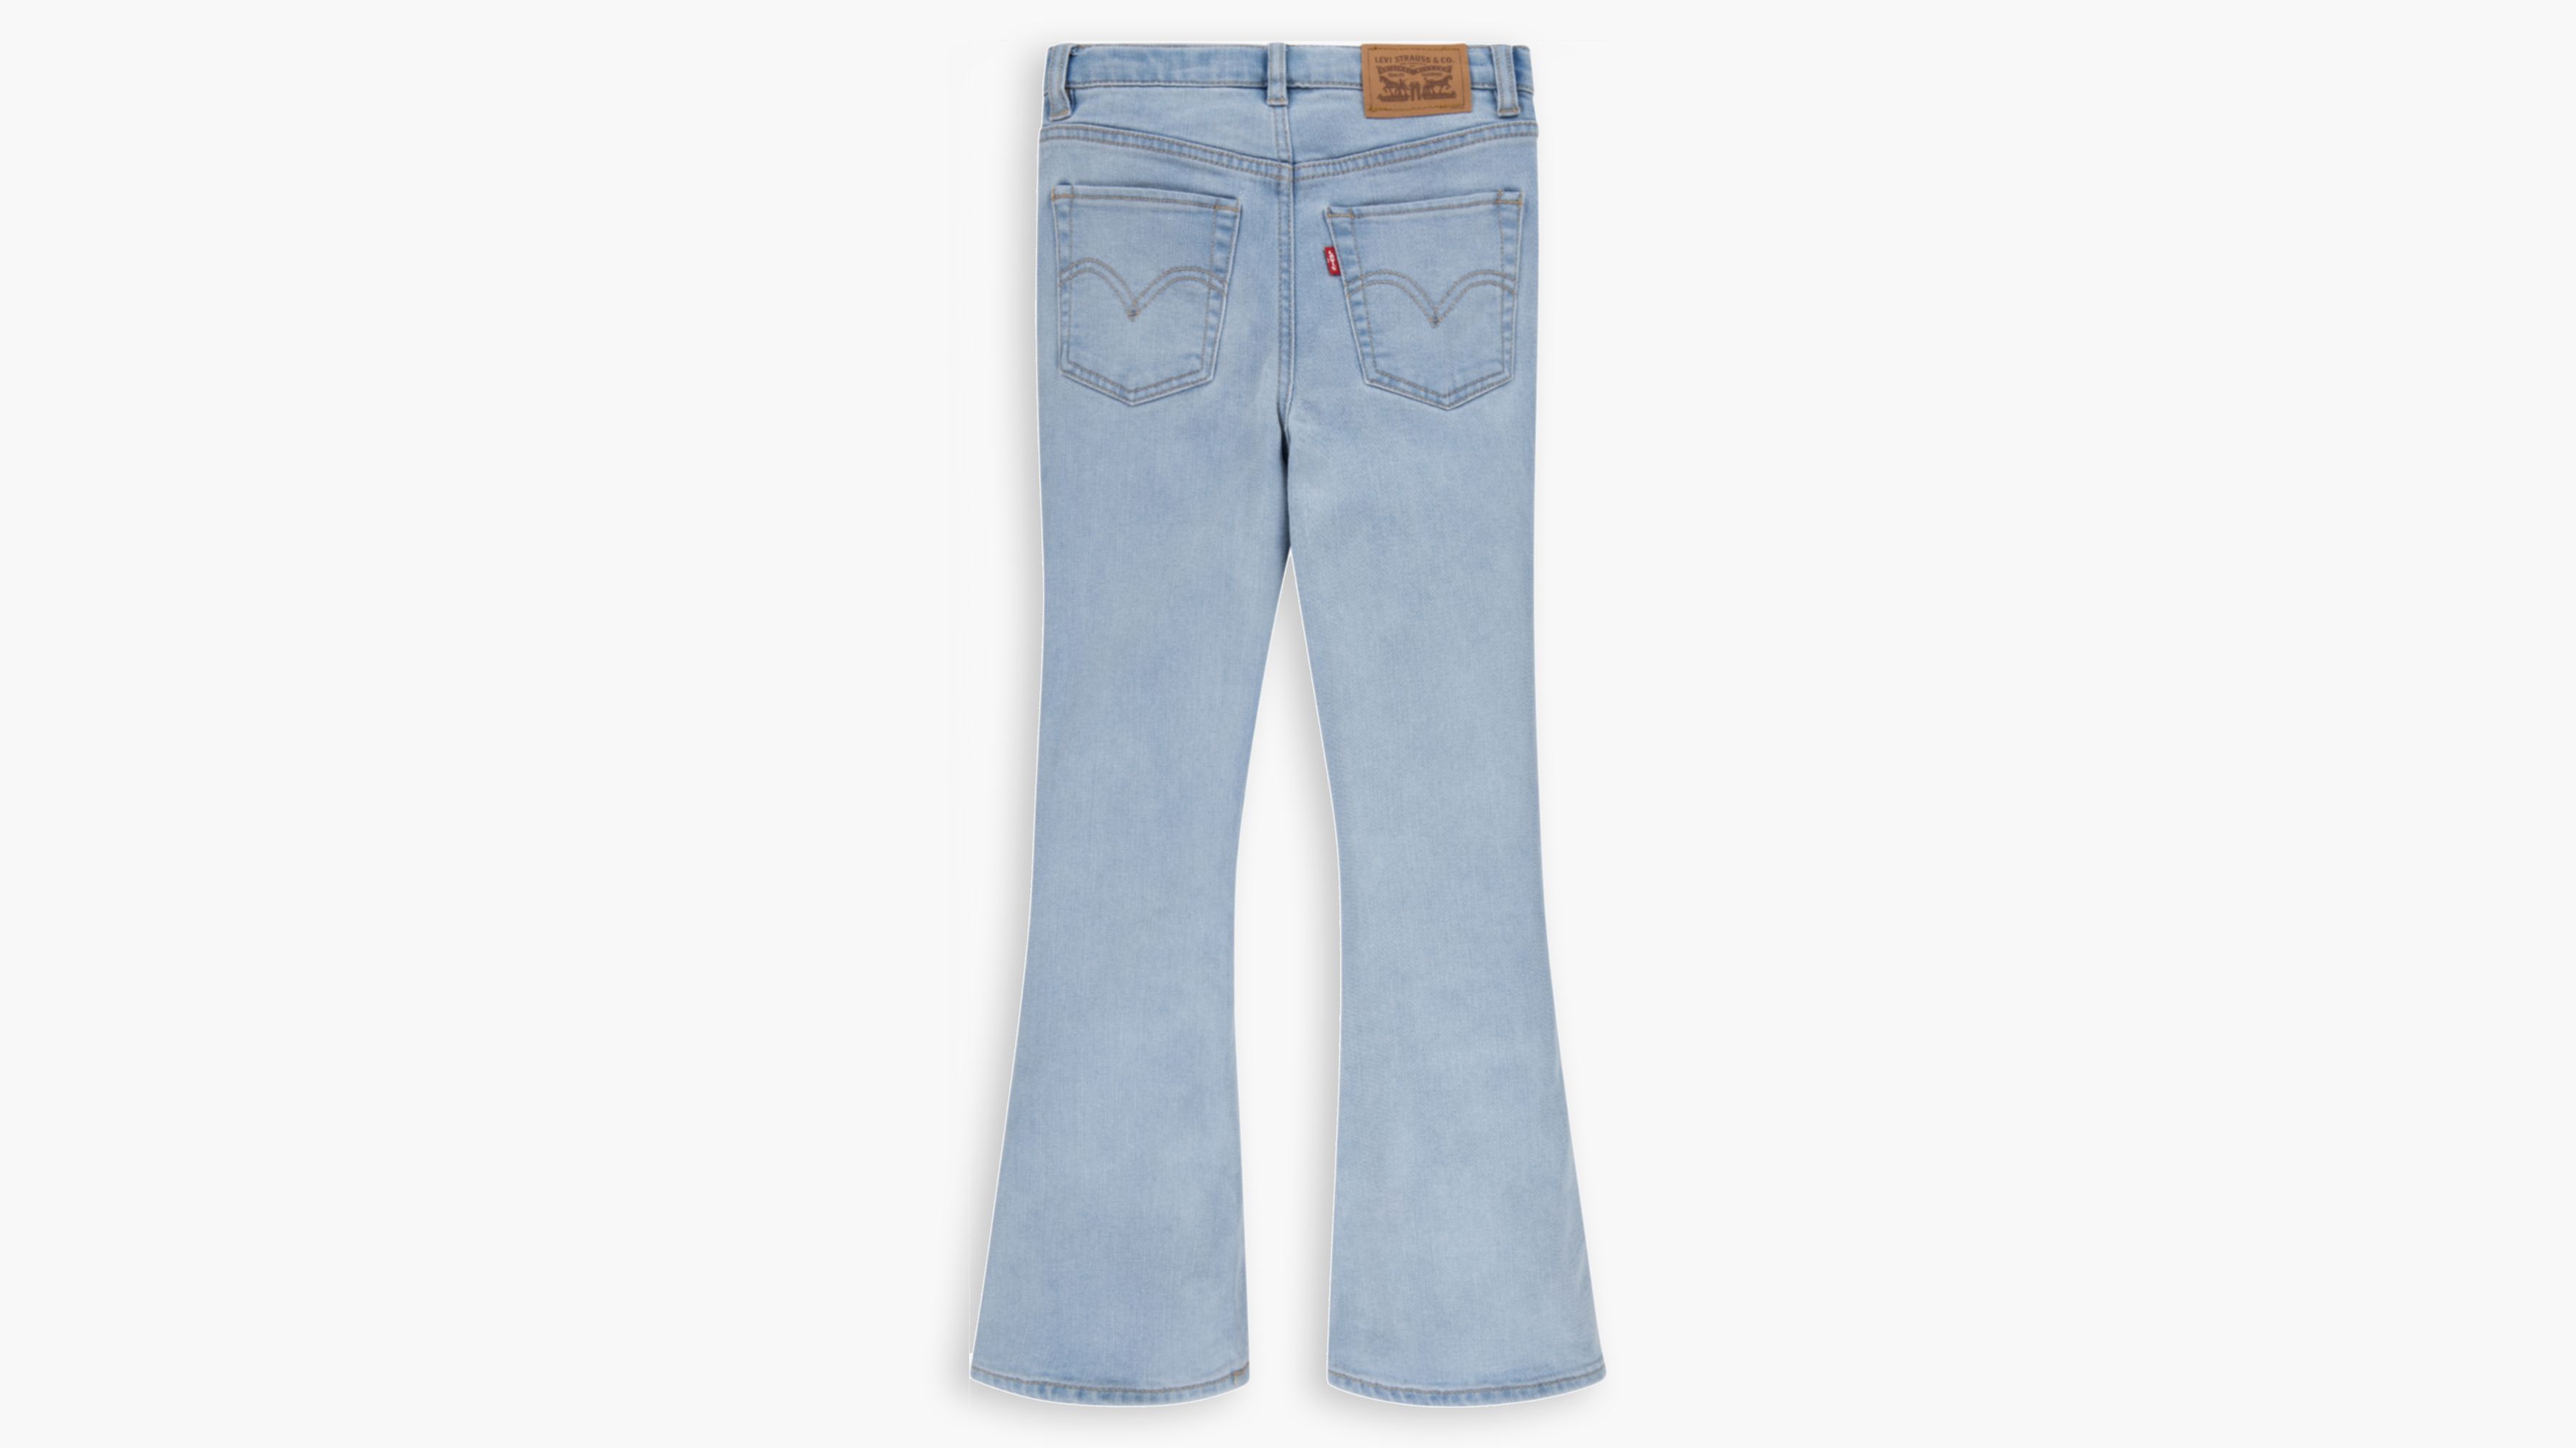 flare6  Jeans for short legs, Jeans for short women, Flare jeans